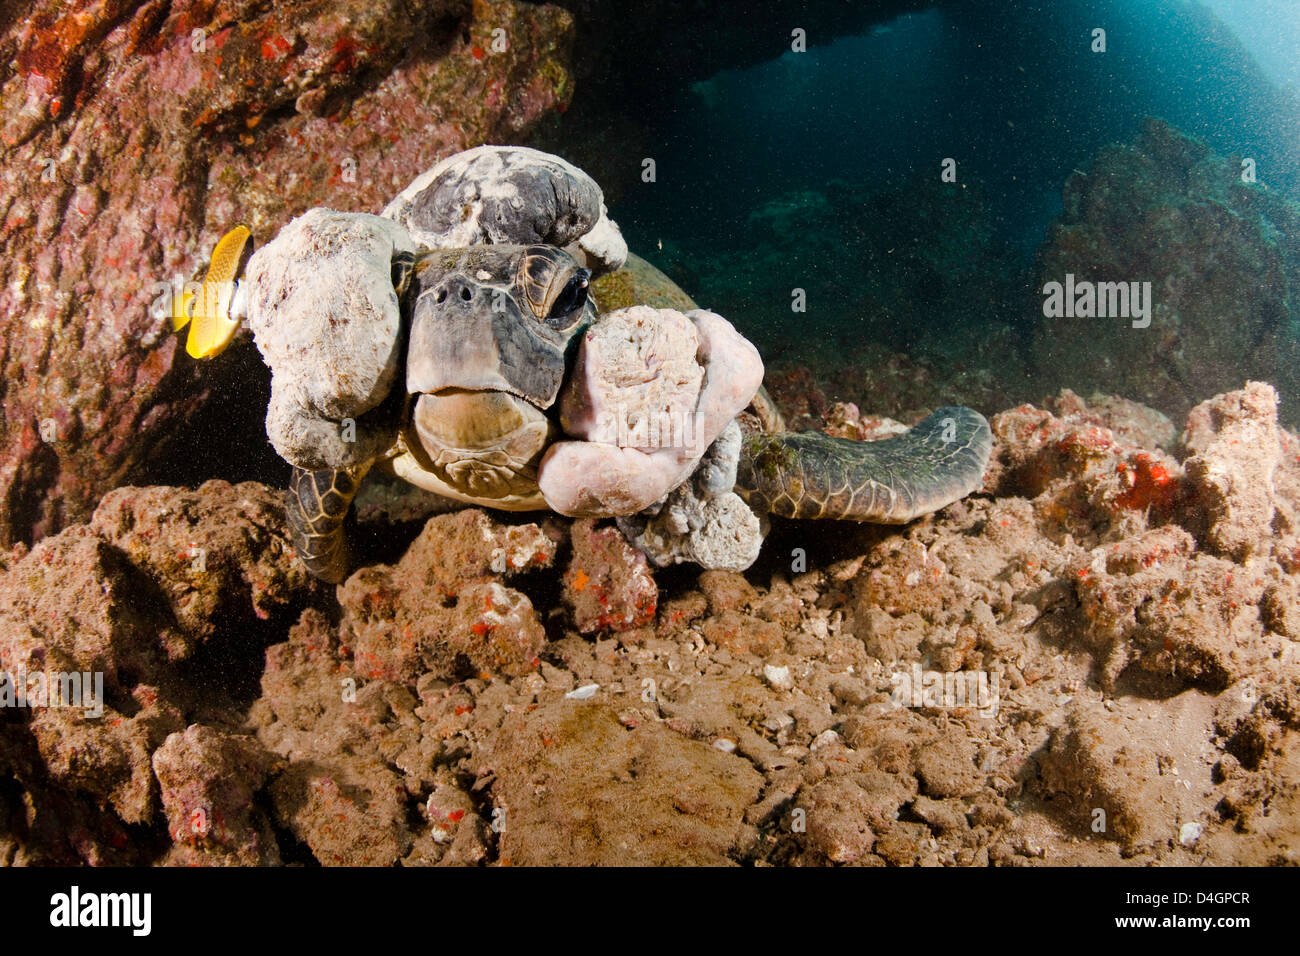 This green sea turtle, Chelonia mydas, has a fibropapilloma tumors covering it’s head and eyes. Hawaii. Stock Photo